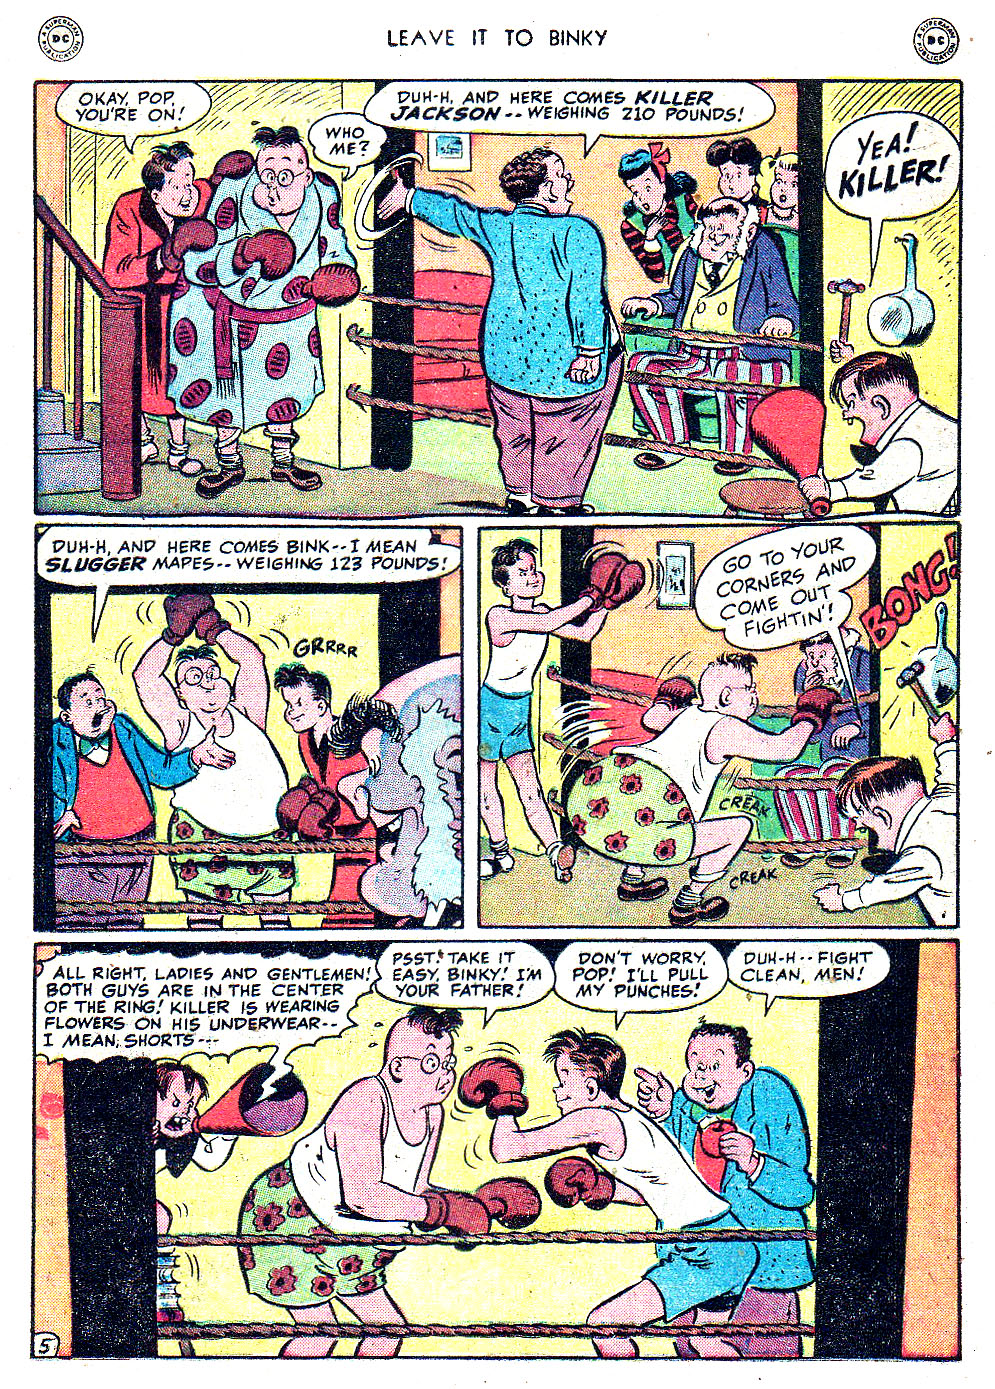 Read online Leave it to Binky comic -  Issue #4 - 25